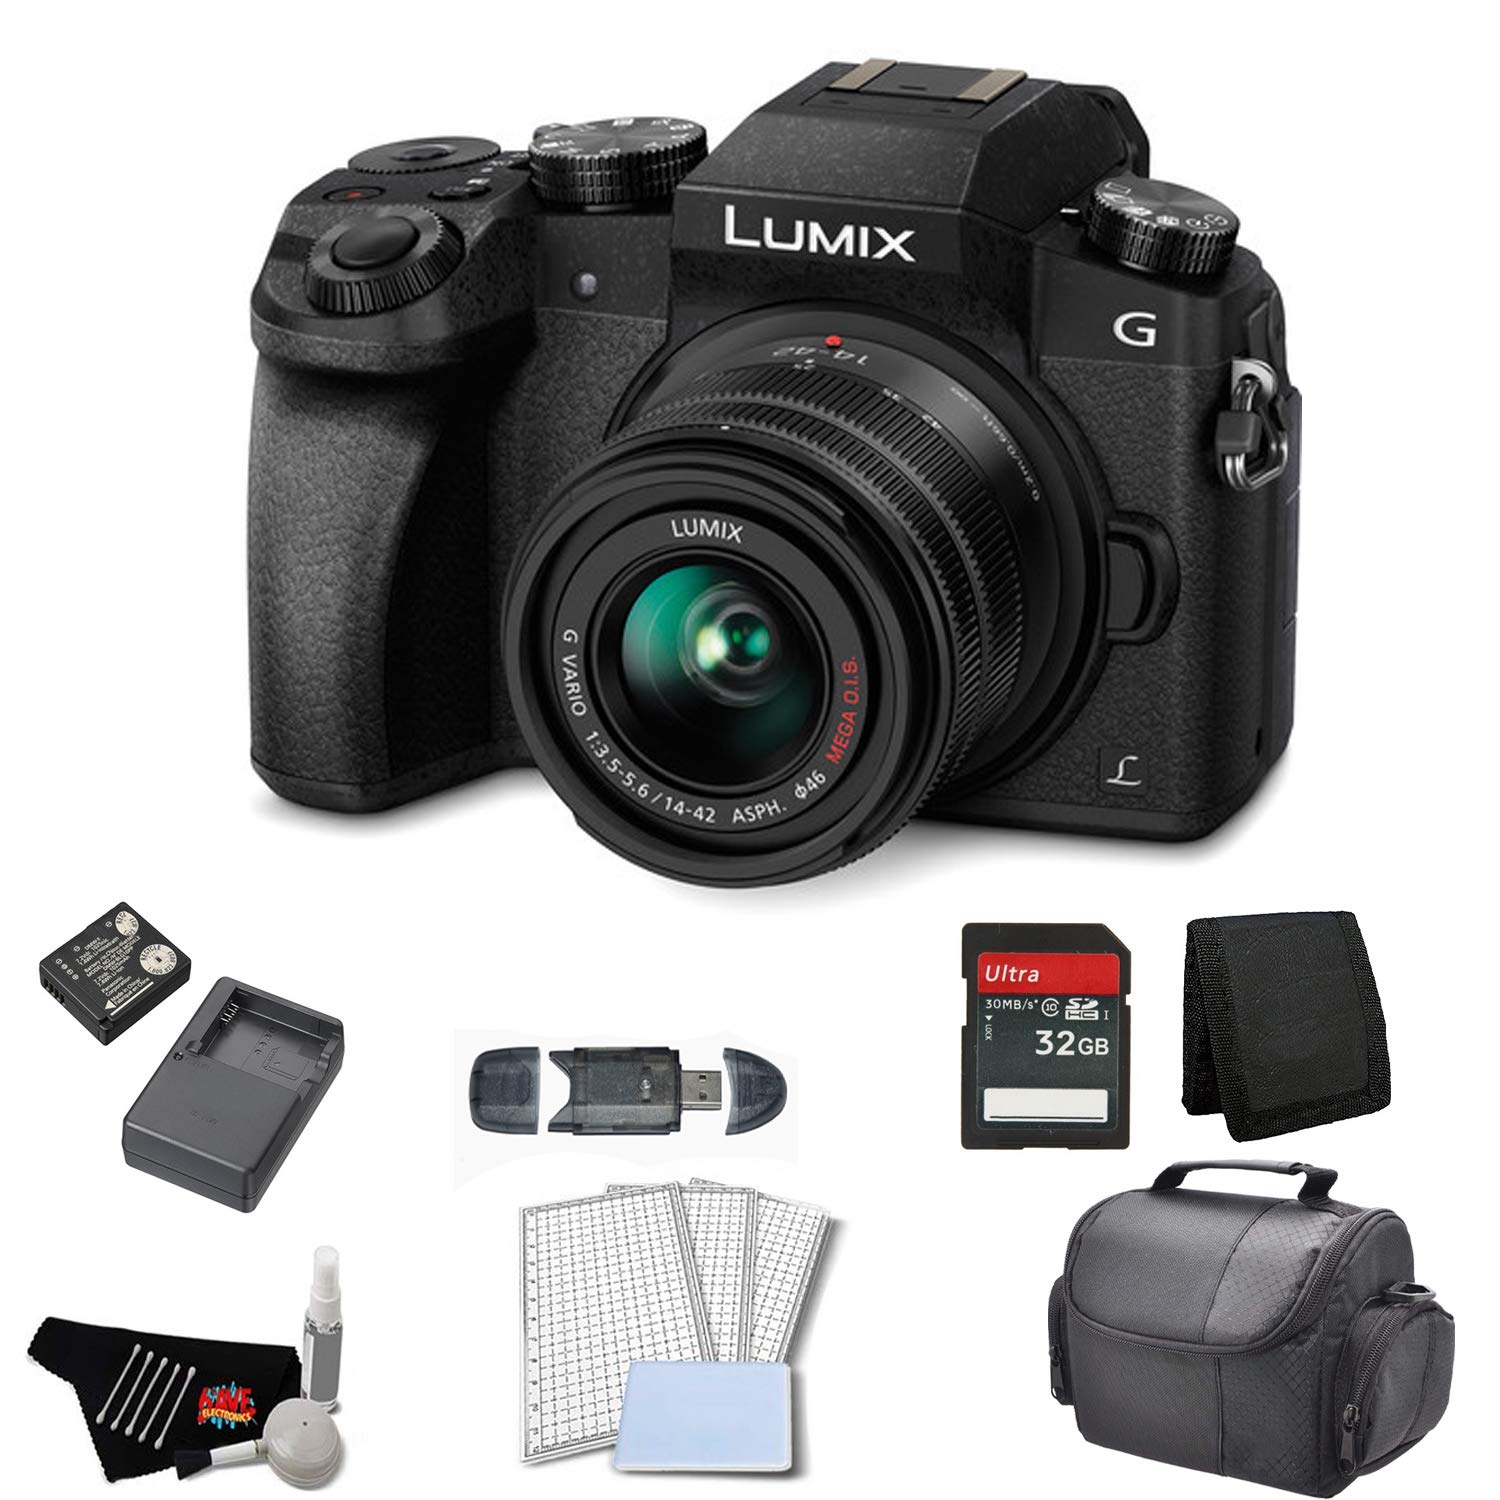 Panasonic Lumix DMC-G7 Mirrorless Micro Four Thirds Digital Camera with 14-42mm Lens (Black) - Bundle with 32GB Memory C